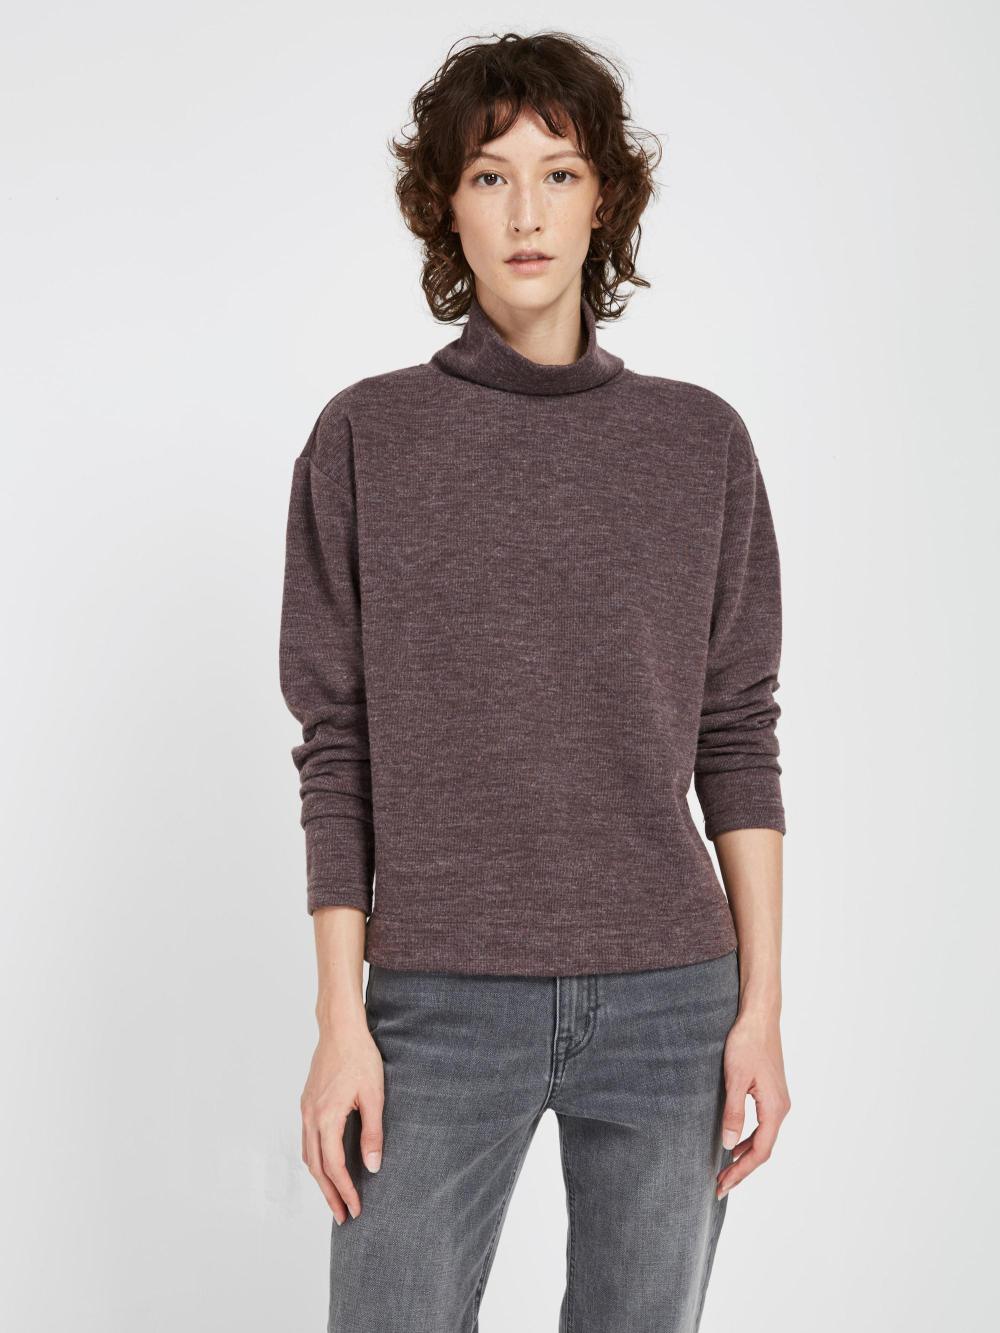 frank and oak purple mockneck sweater 